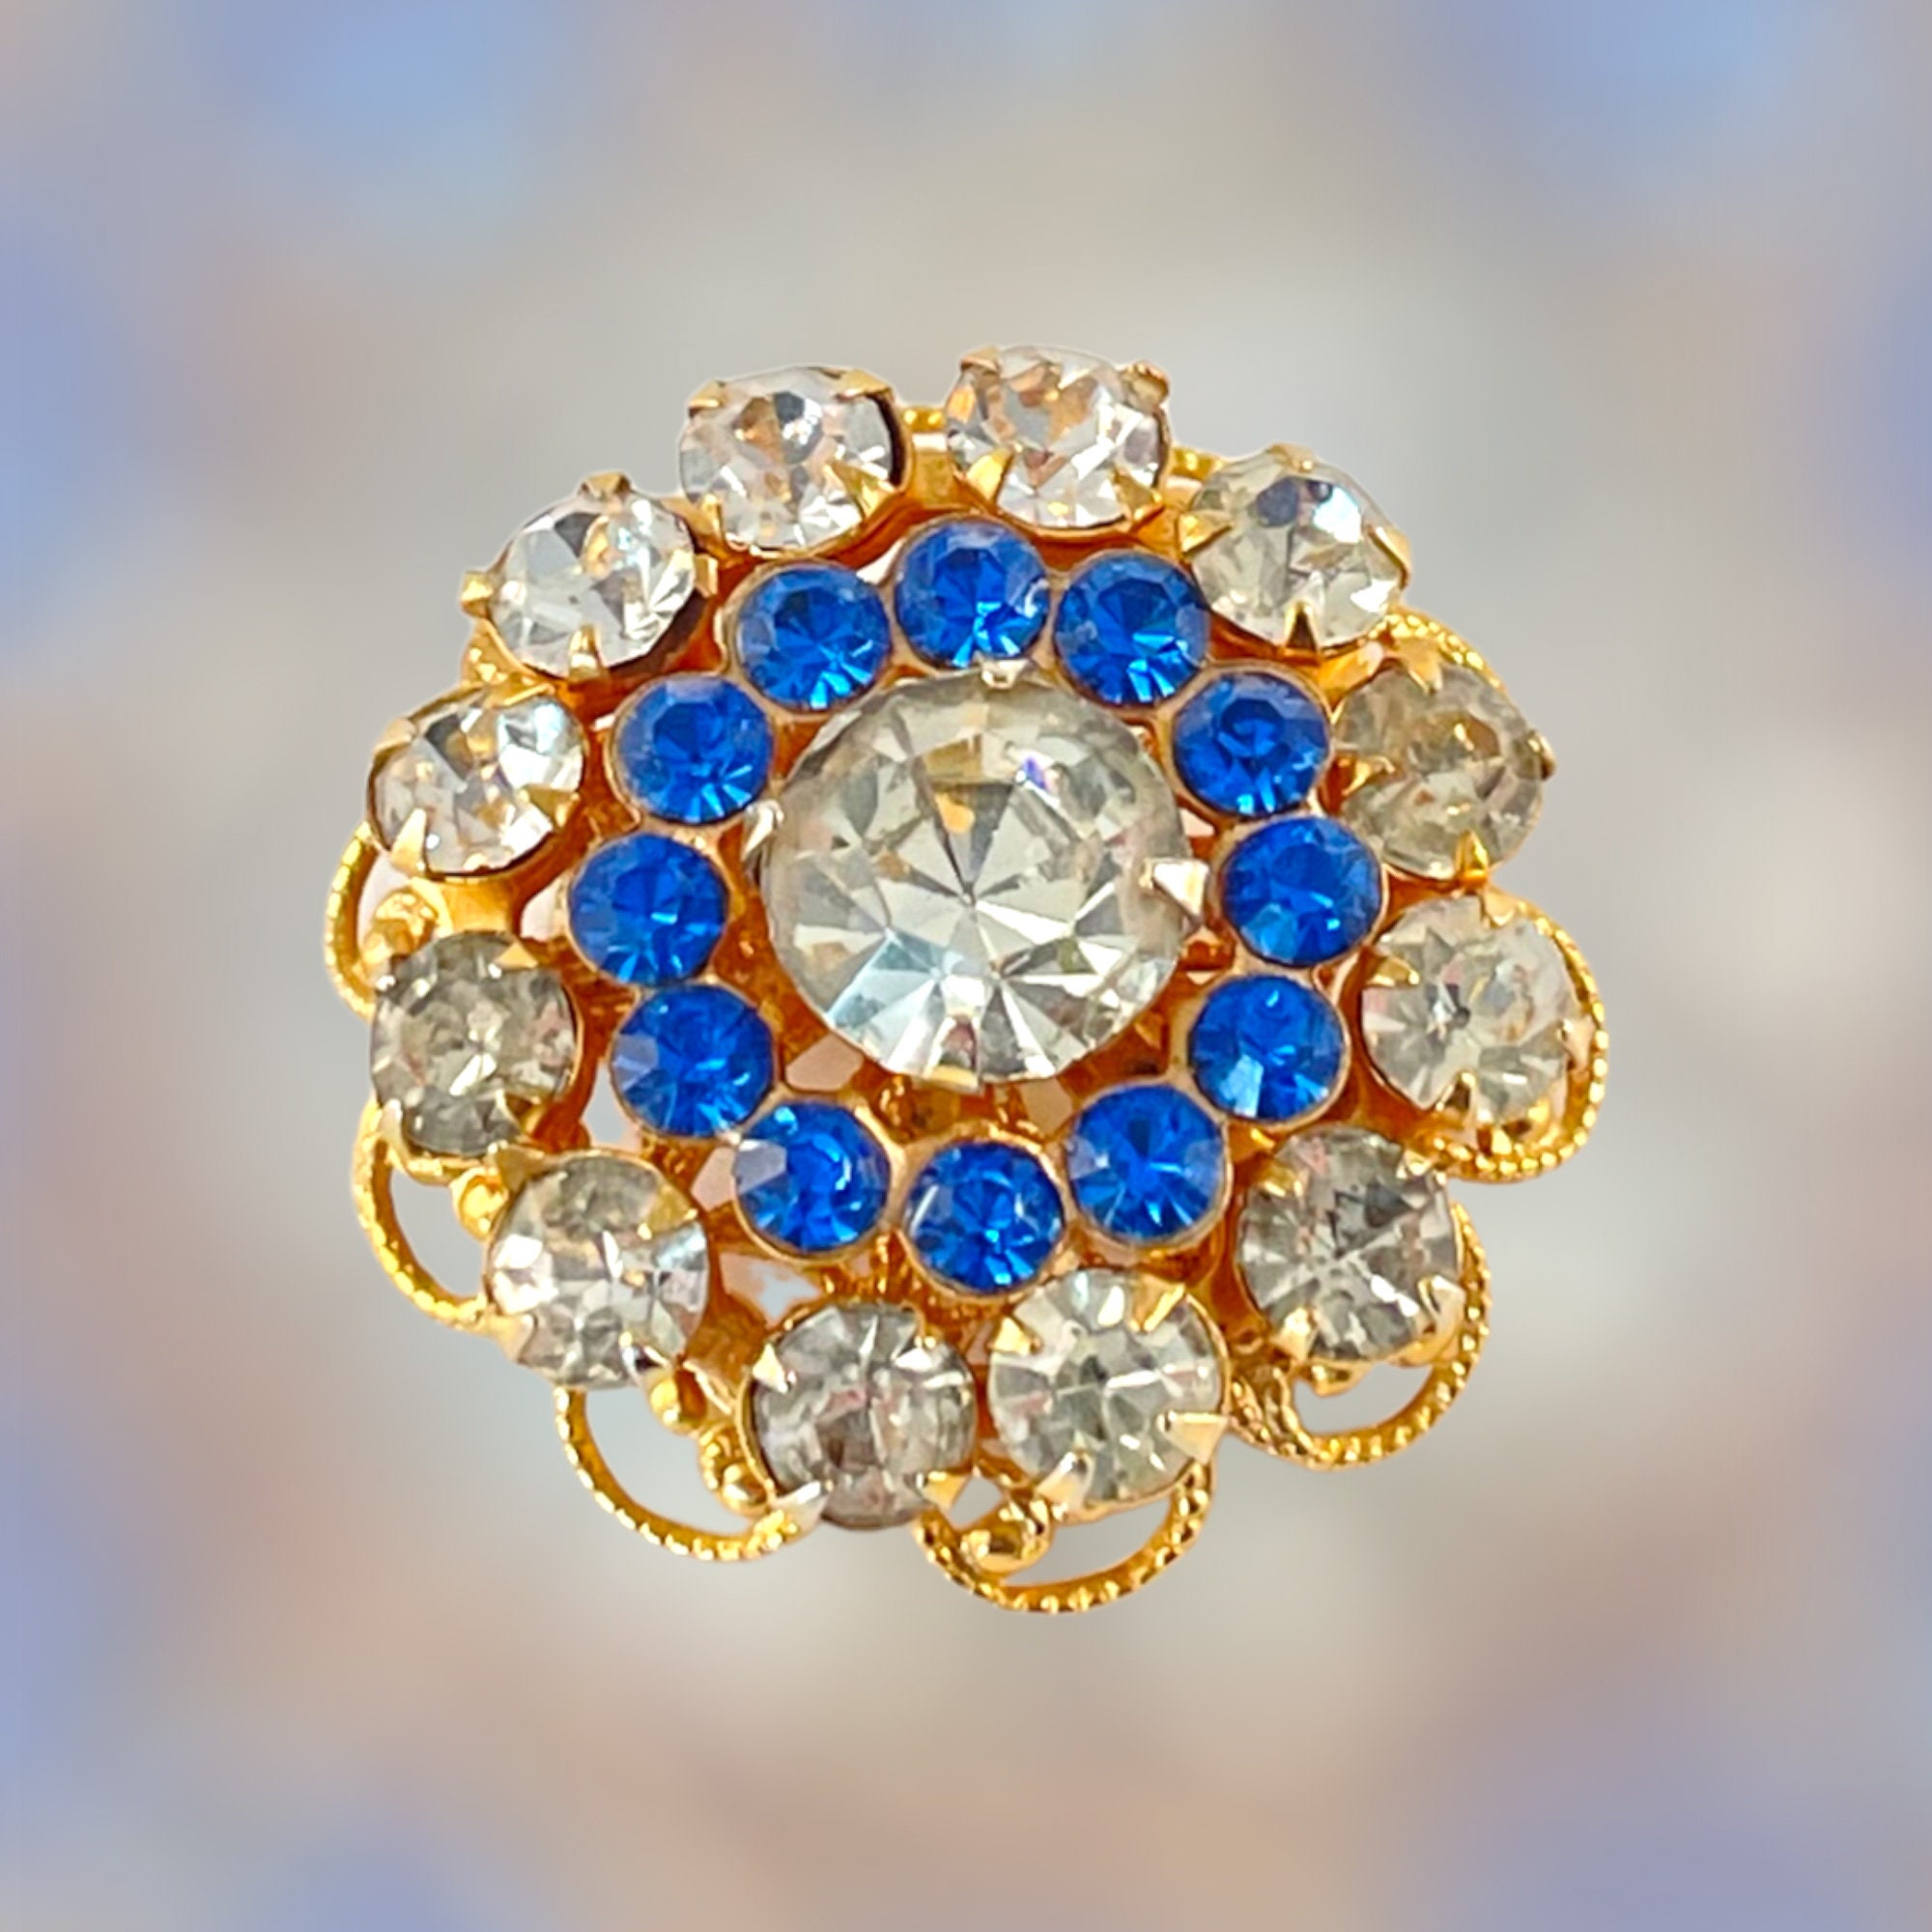 Vintage Sparkly Bright Blue Rhinestones Gold Tone Triangle Brooch